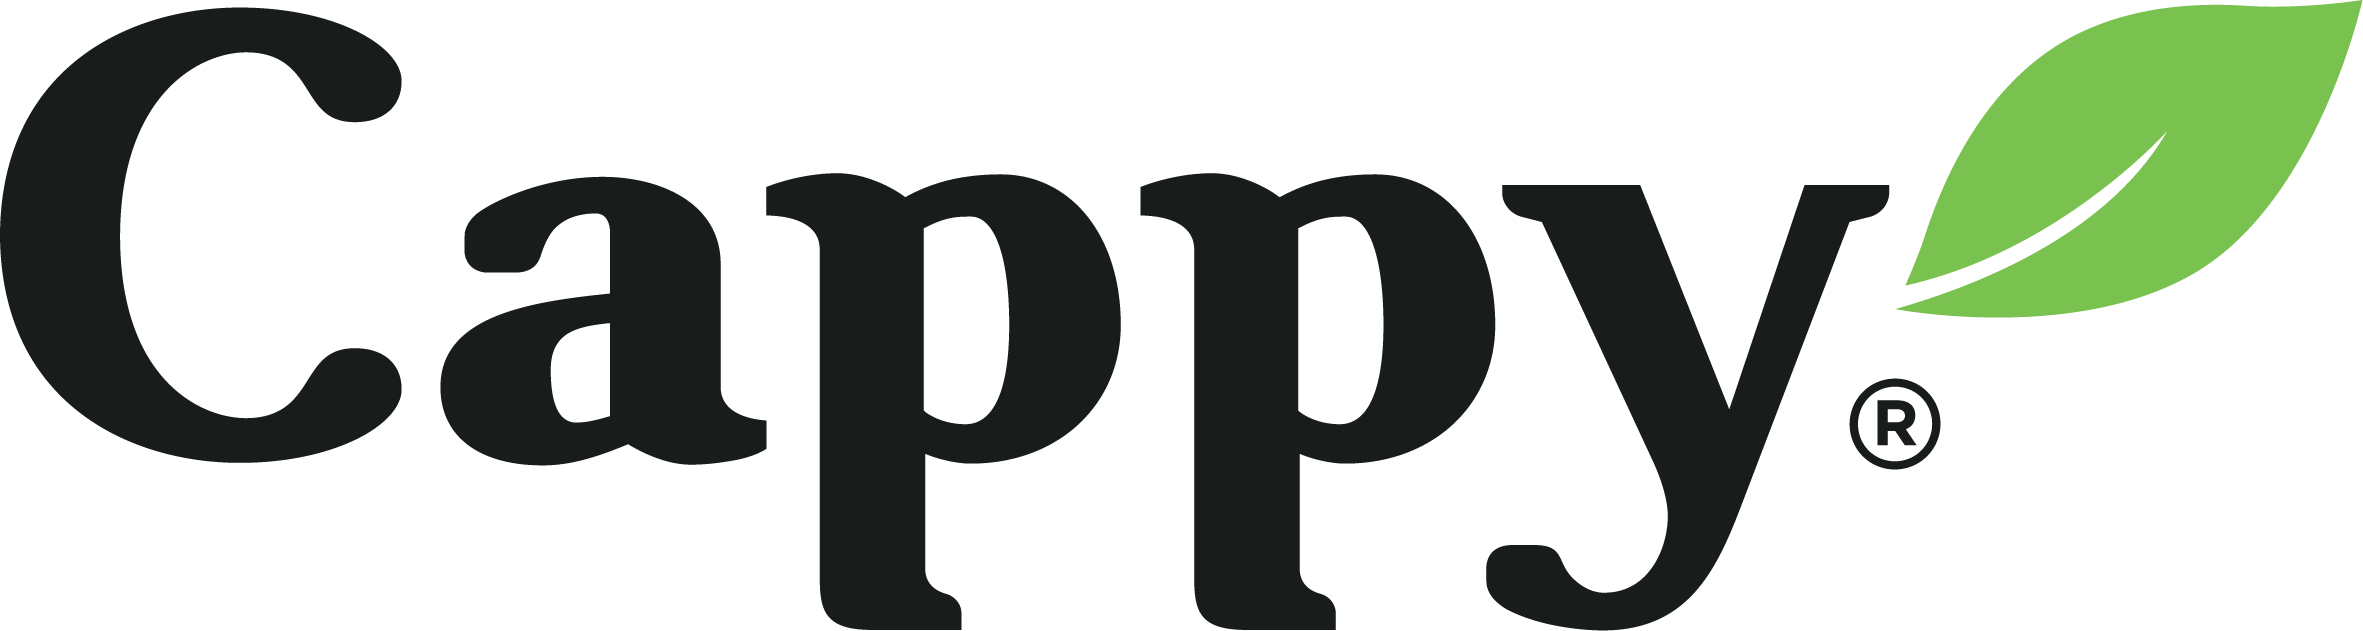 Cappy logo 2020